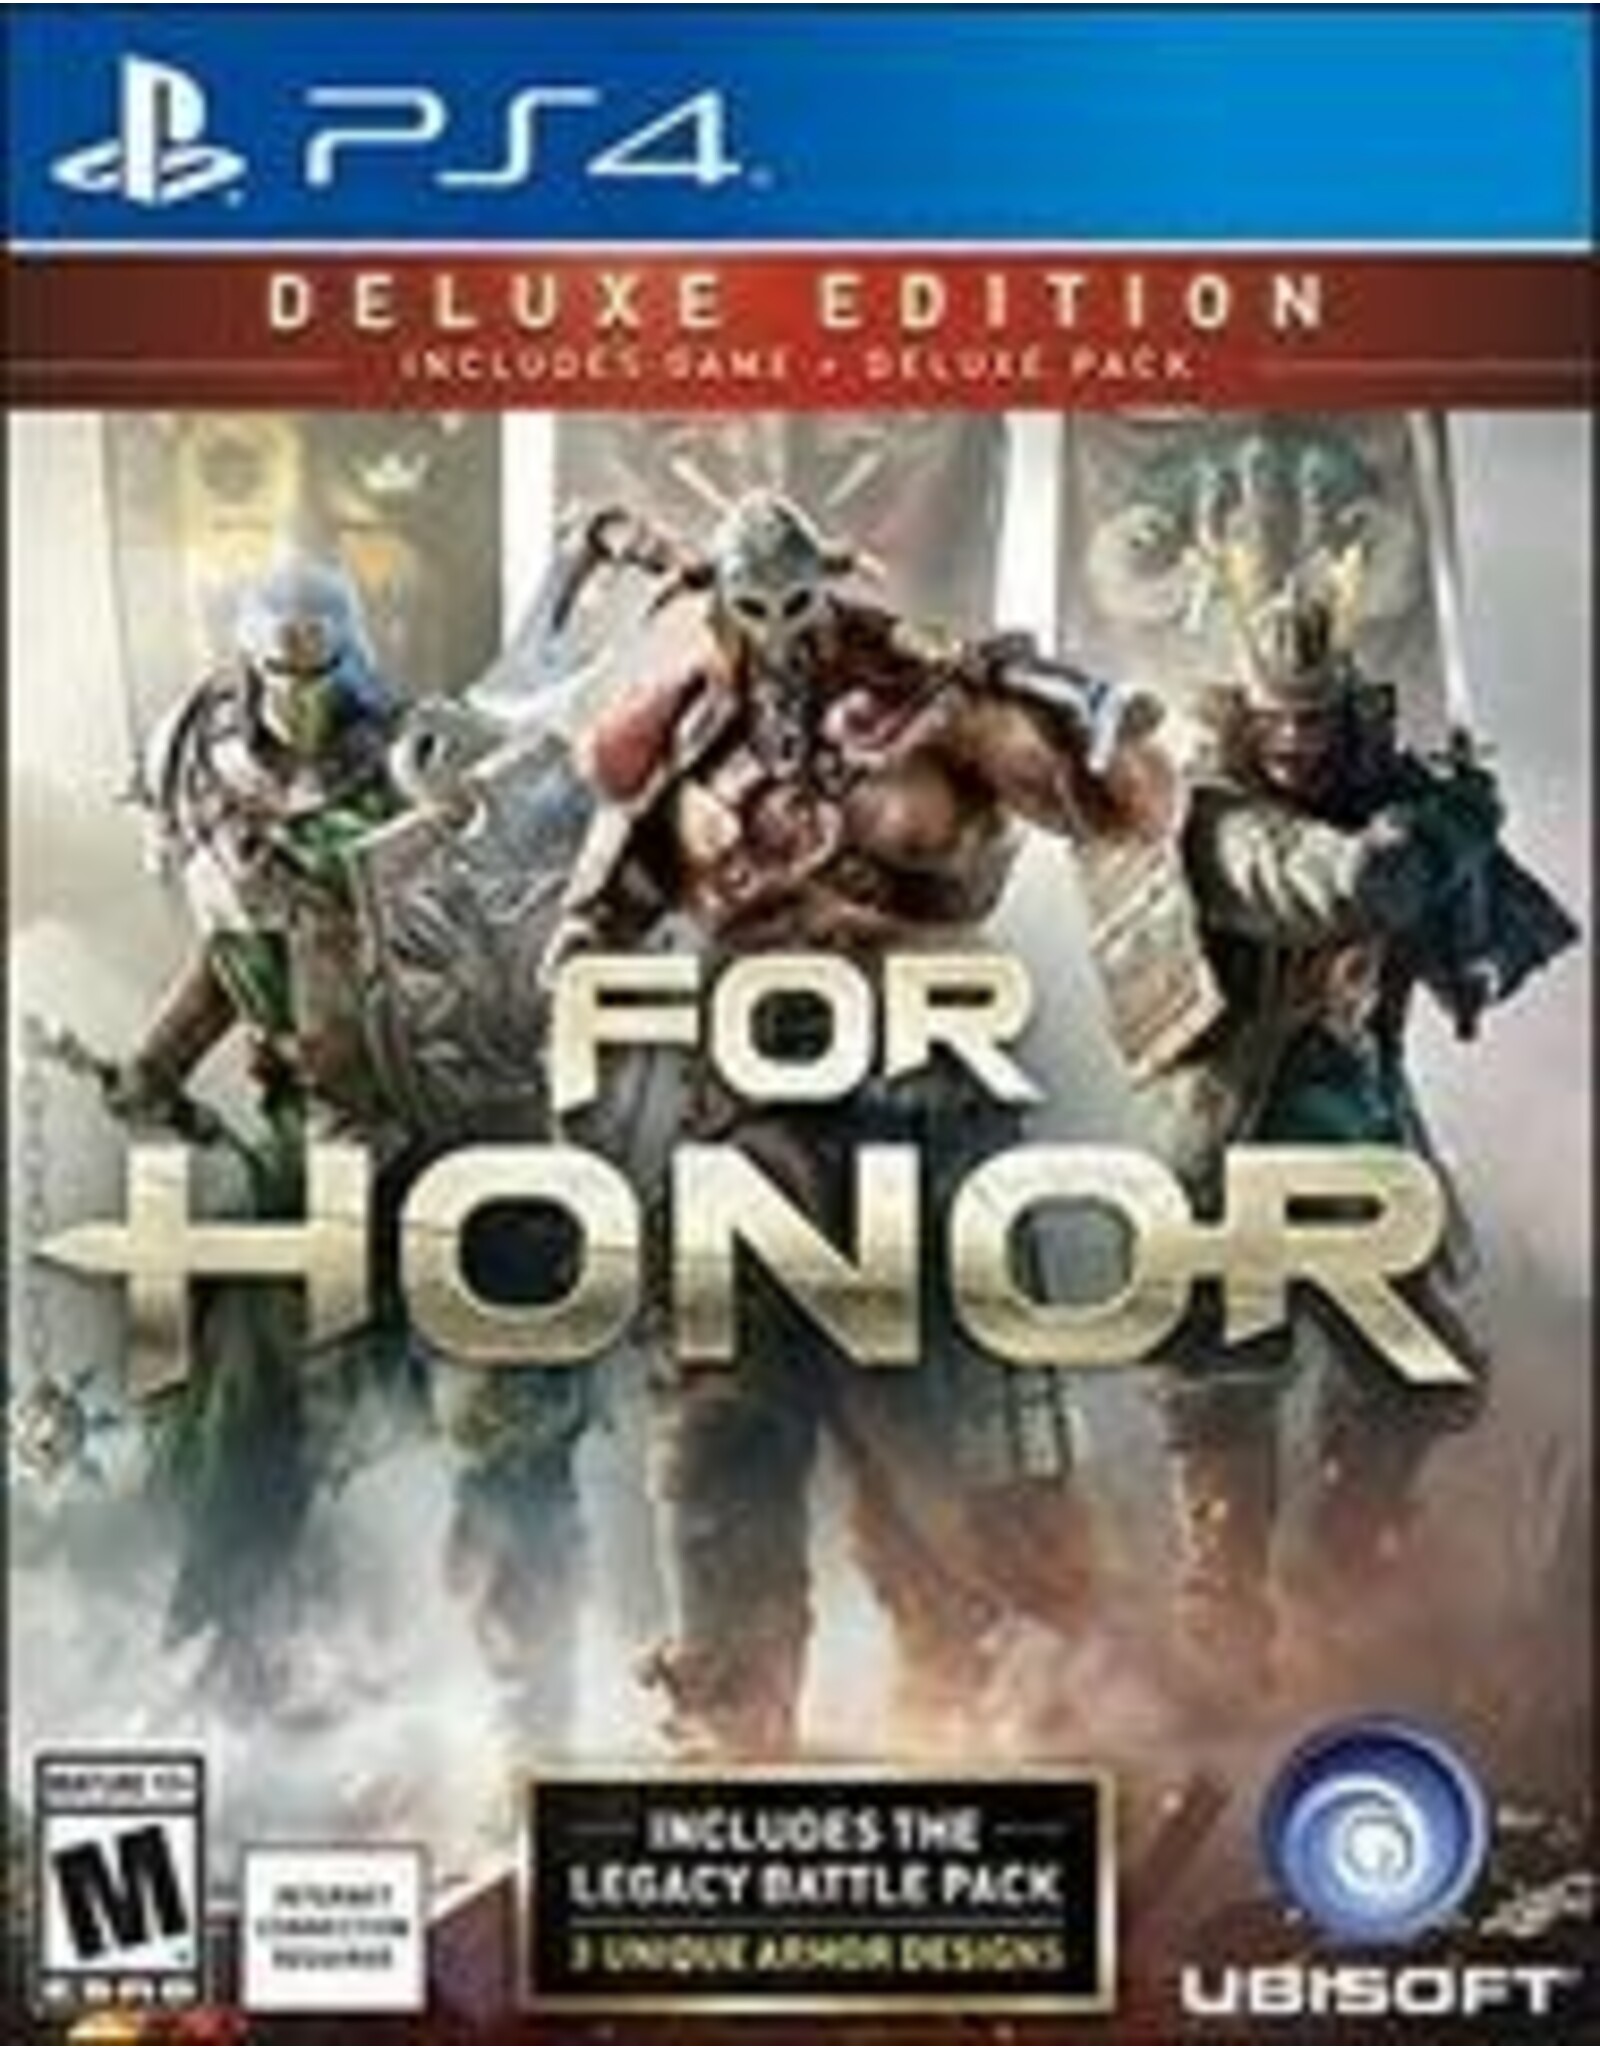 Playstation 4 For Honor Deluxe Edition (CiB, No DLC)